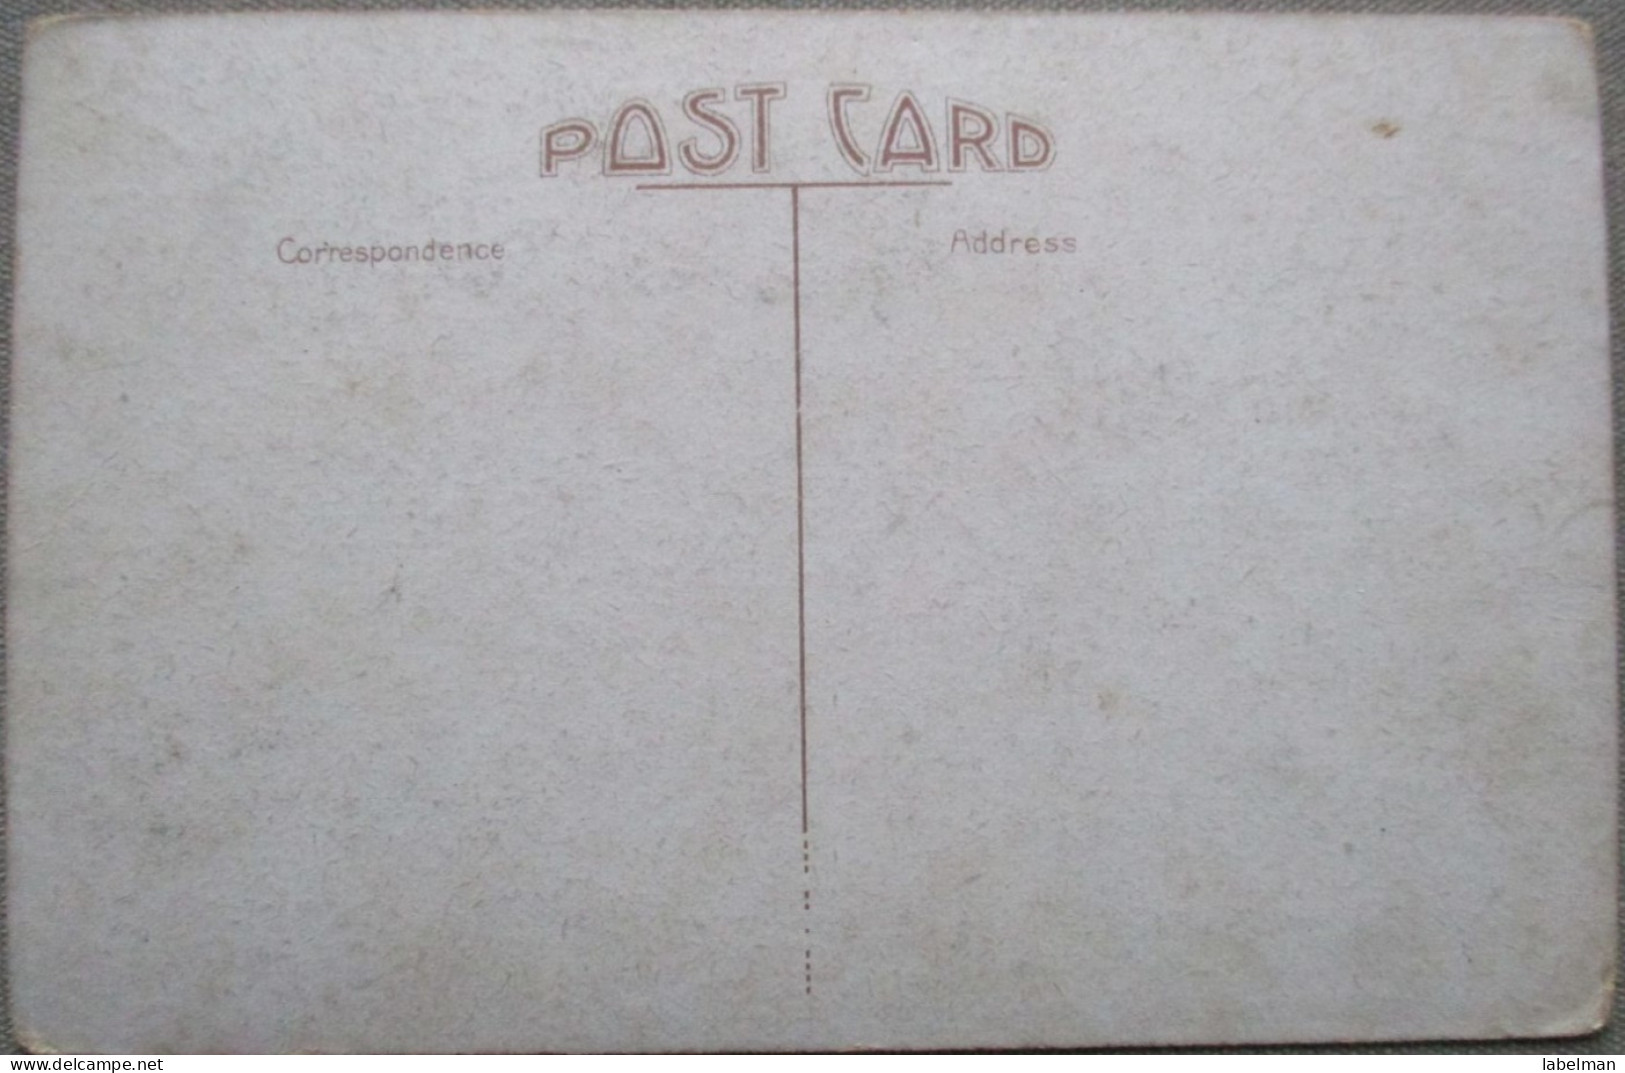 IRLAND UK UNITED KINGDOM BLARNEY CASTLE STONE CP PC KARTE CARD POSTKARTE POSTCARD ANSICHTSKARTE CARTOLINA CARTE POSTALE - Colecciones Y Lotes